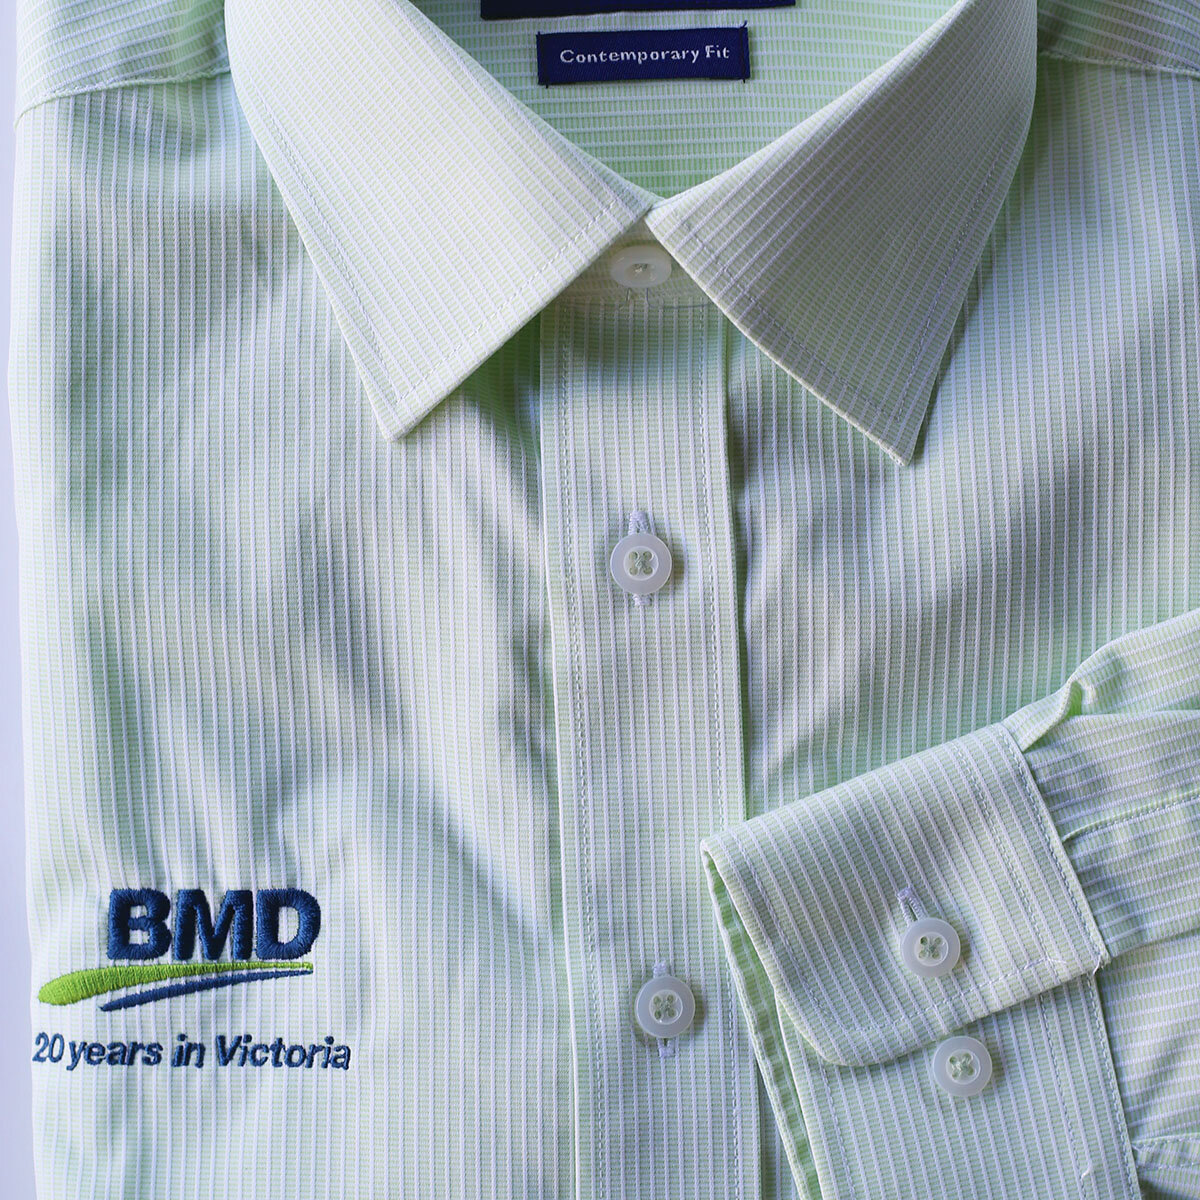 BMD_20years shirt 1200x1200_2.jpg